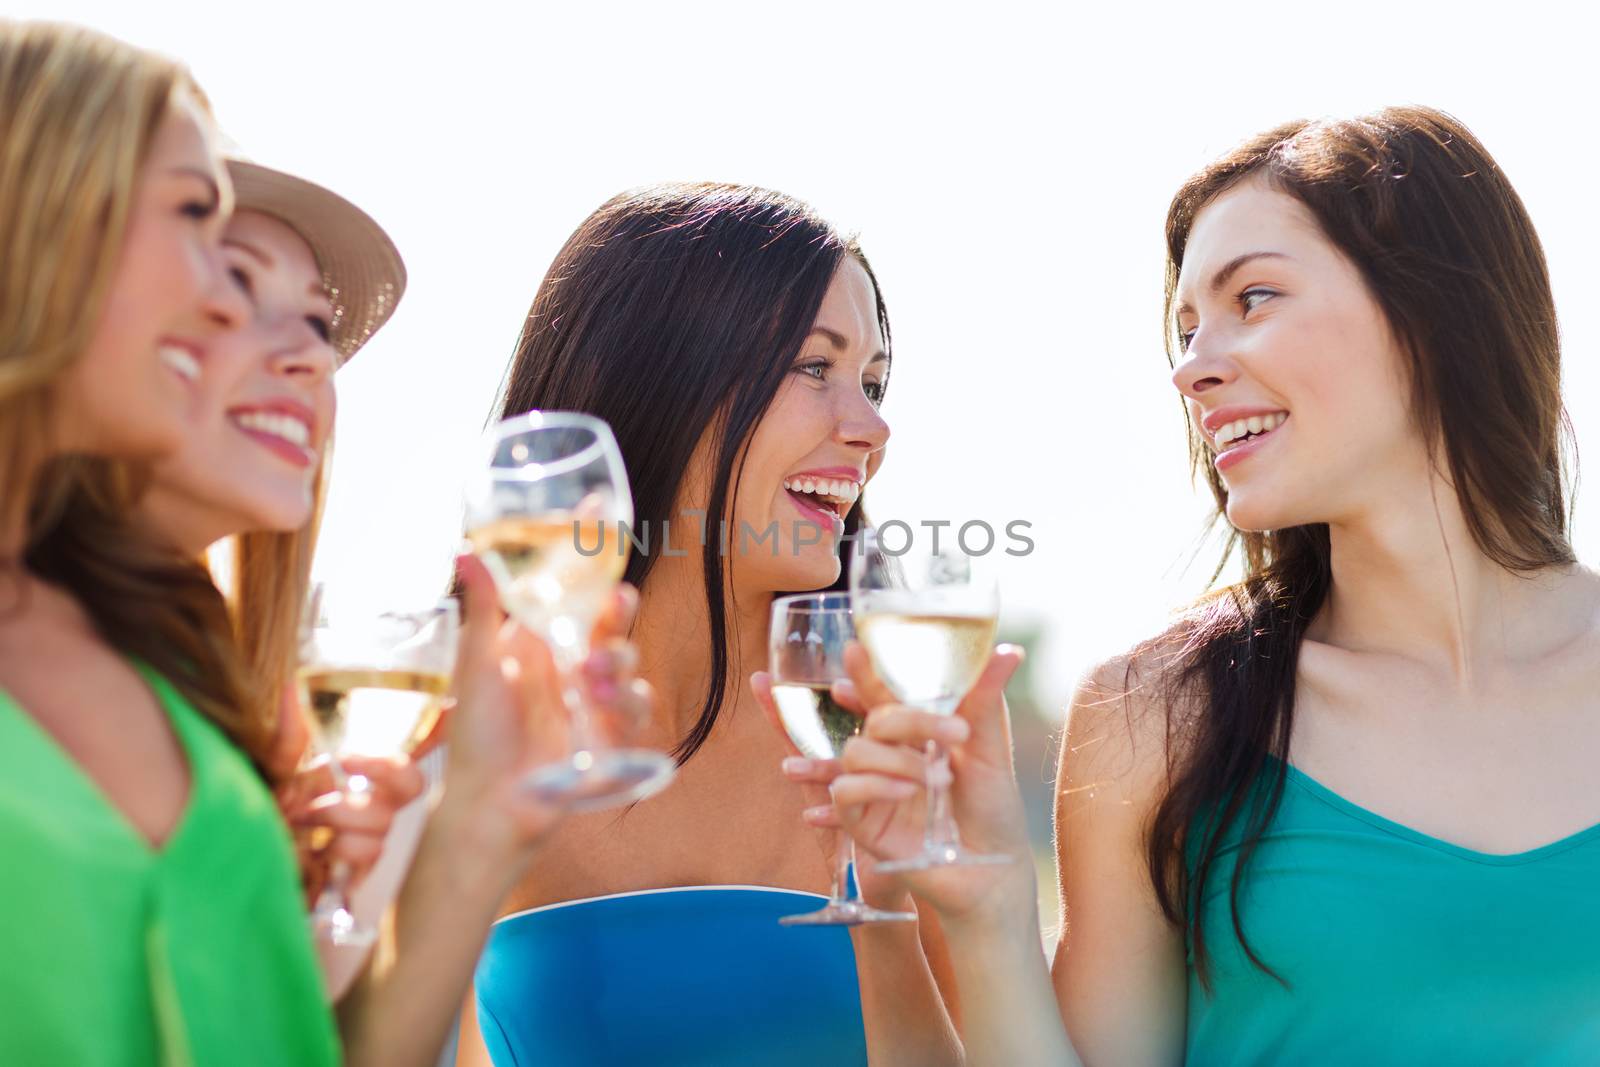 girls with champagne glasses by dolgachov